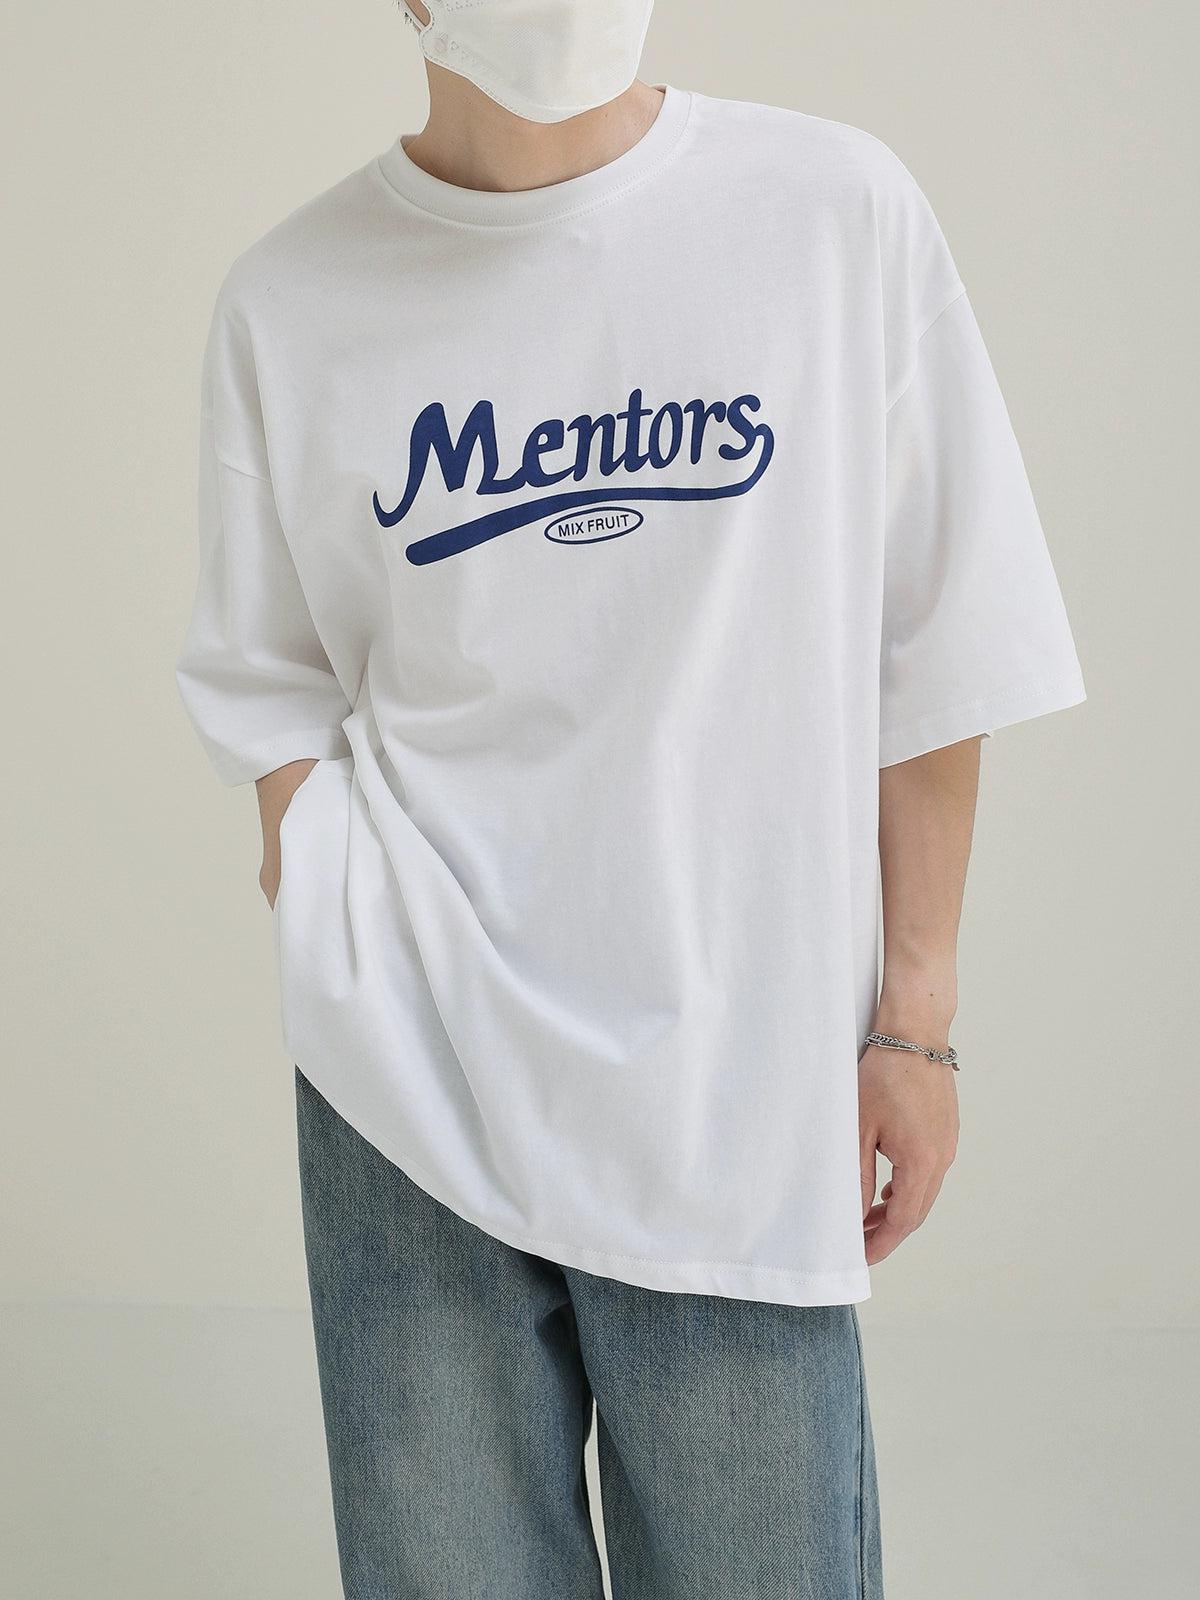 Zhou Mentors Text Print T-Shirt-korean-fashion-T-Shirt-Zhou's Closet-OH Garments